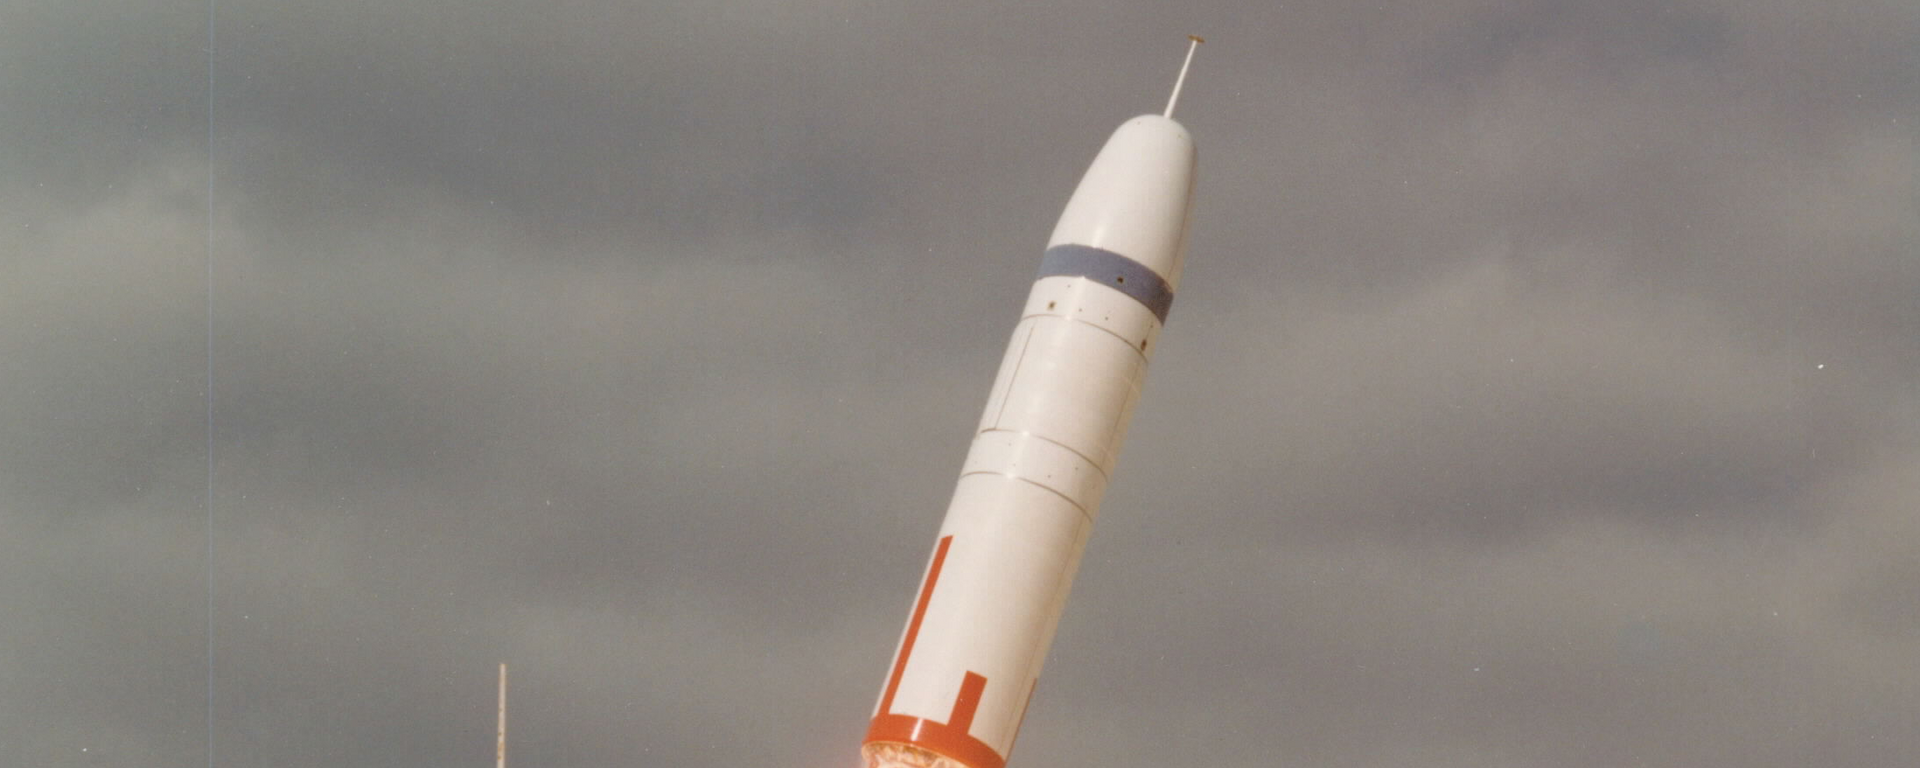 Primer lanzamiento del misil Trident C4  - Sputnik Mundo, 1920, 13.09.2021